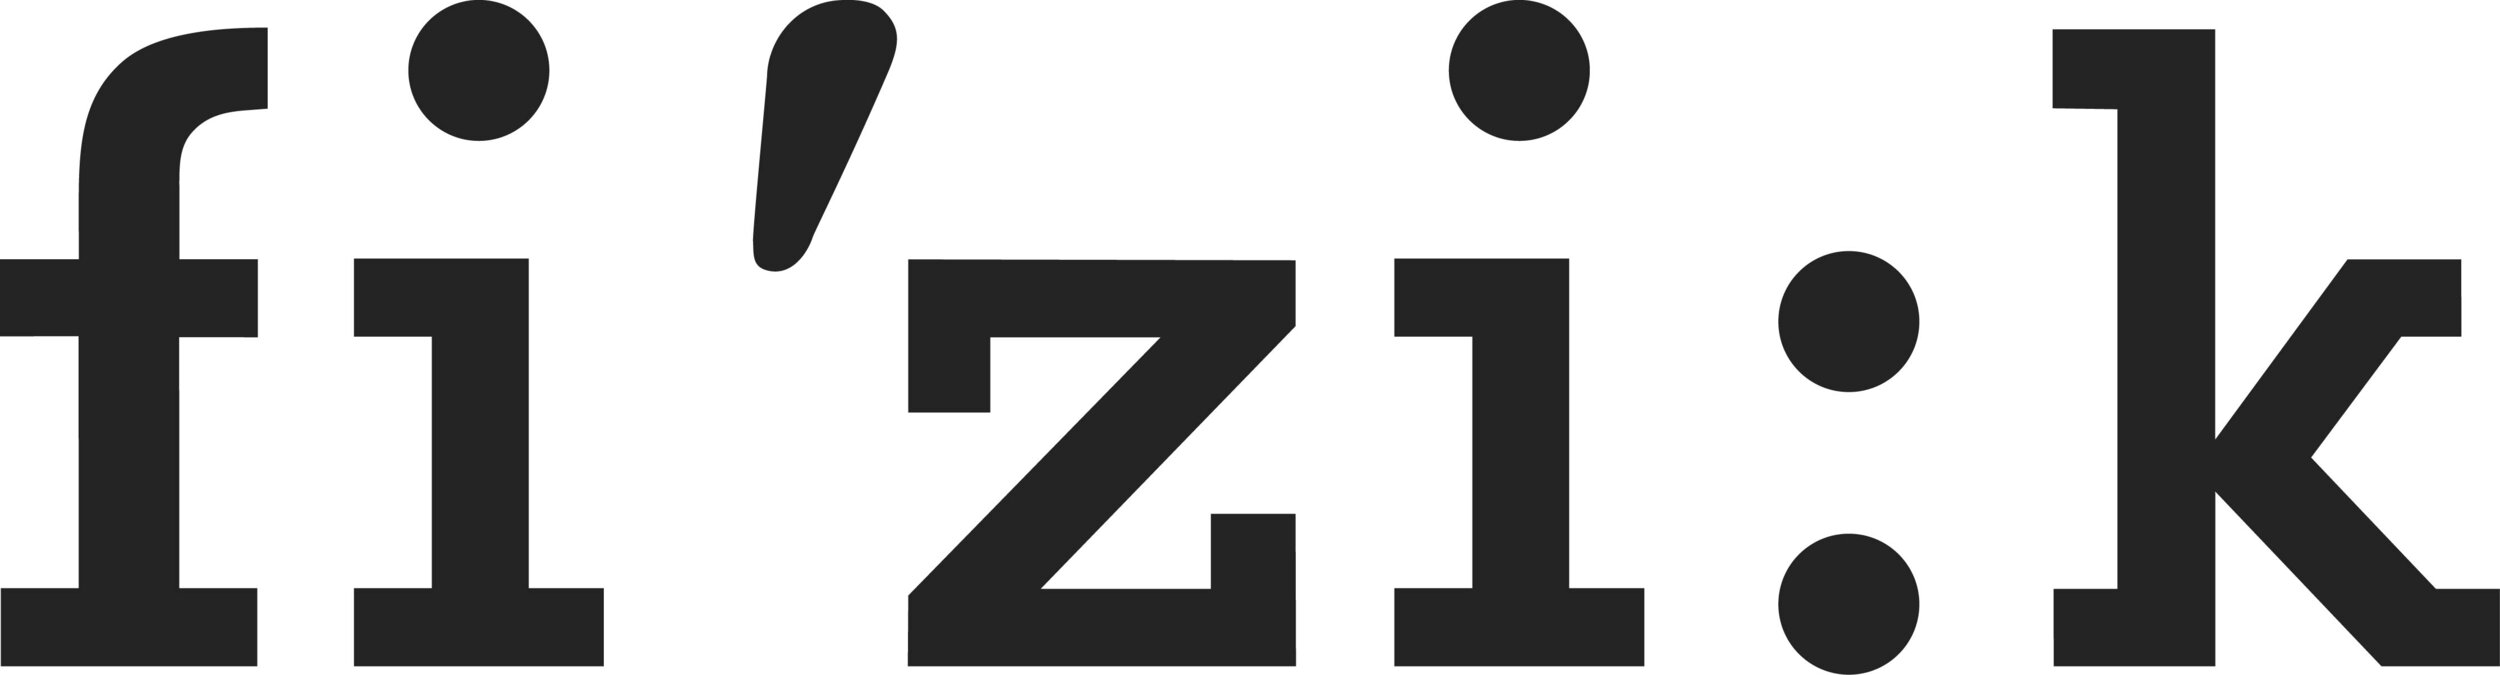 Fizik_Logo.jpg